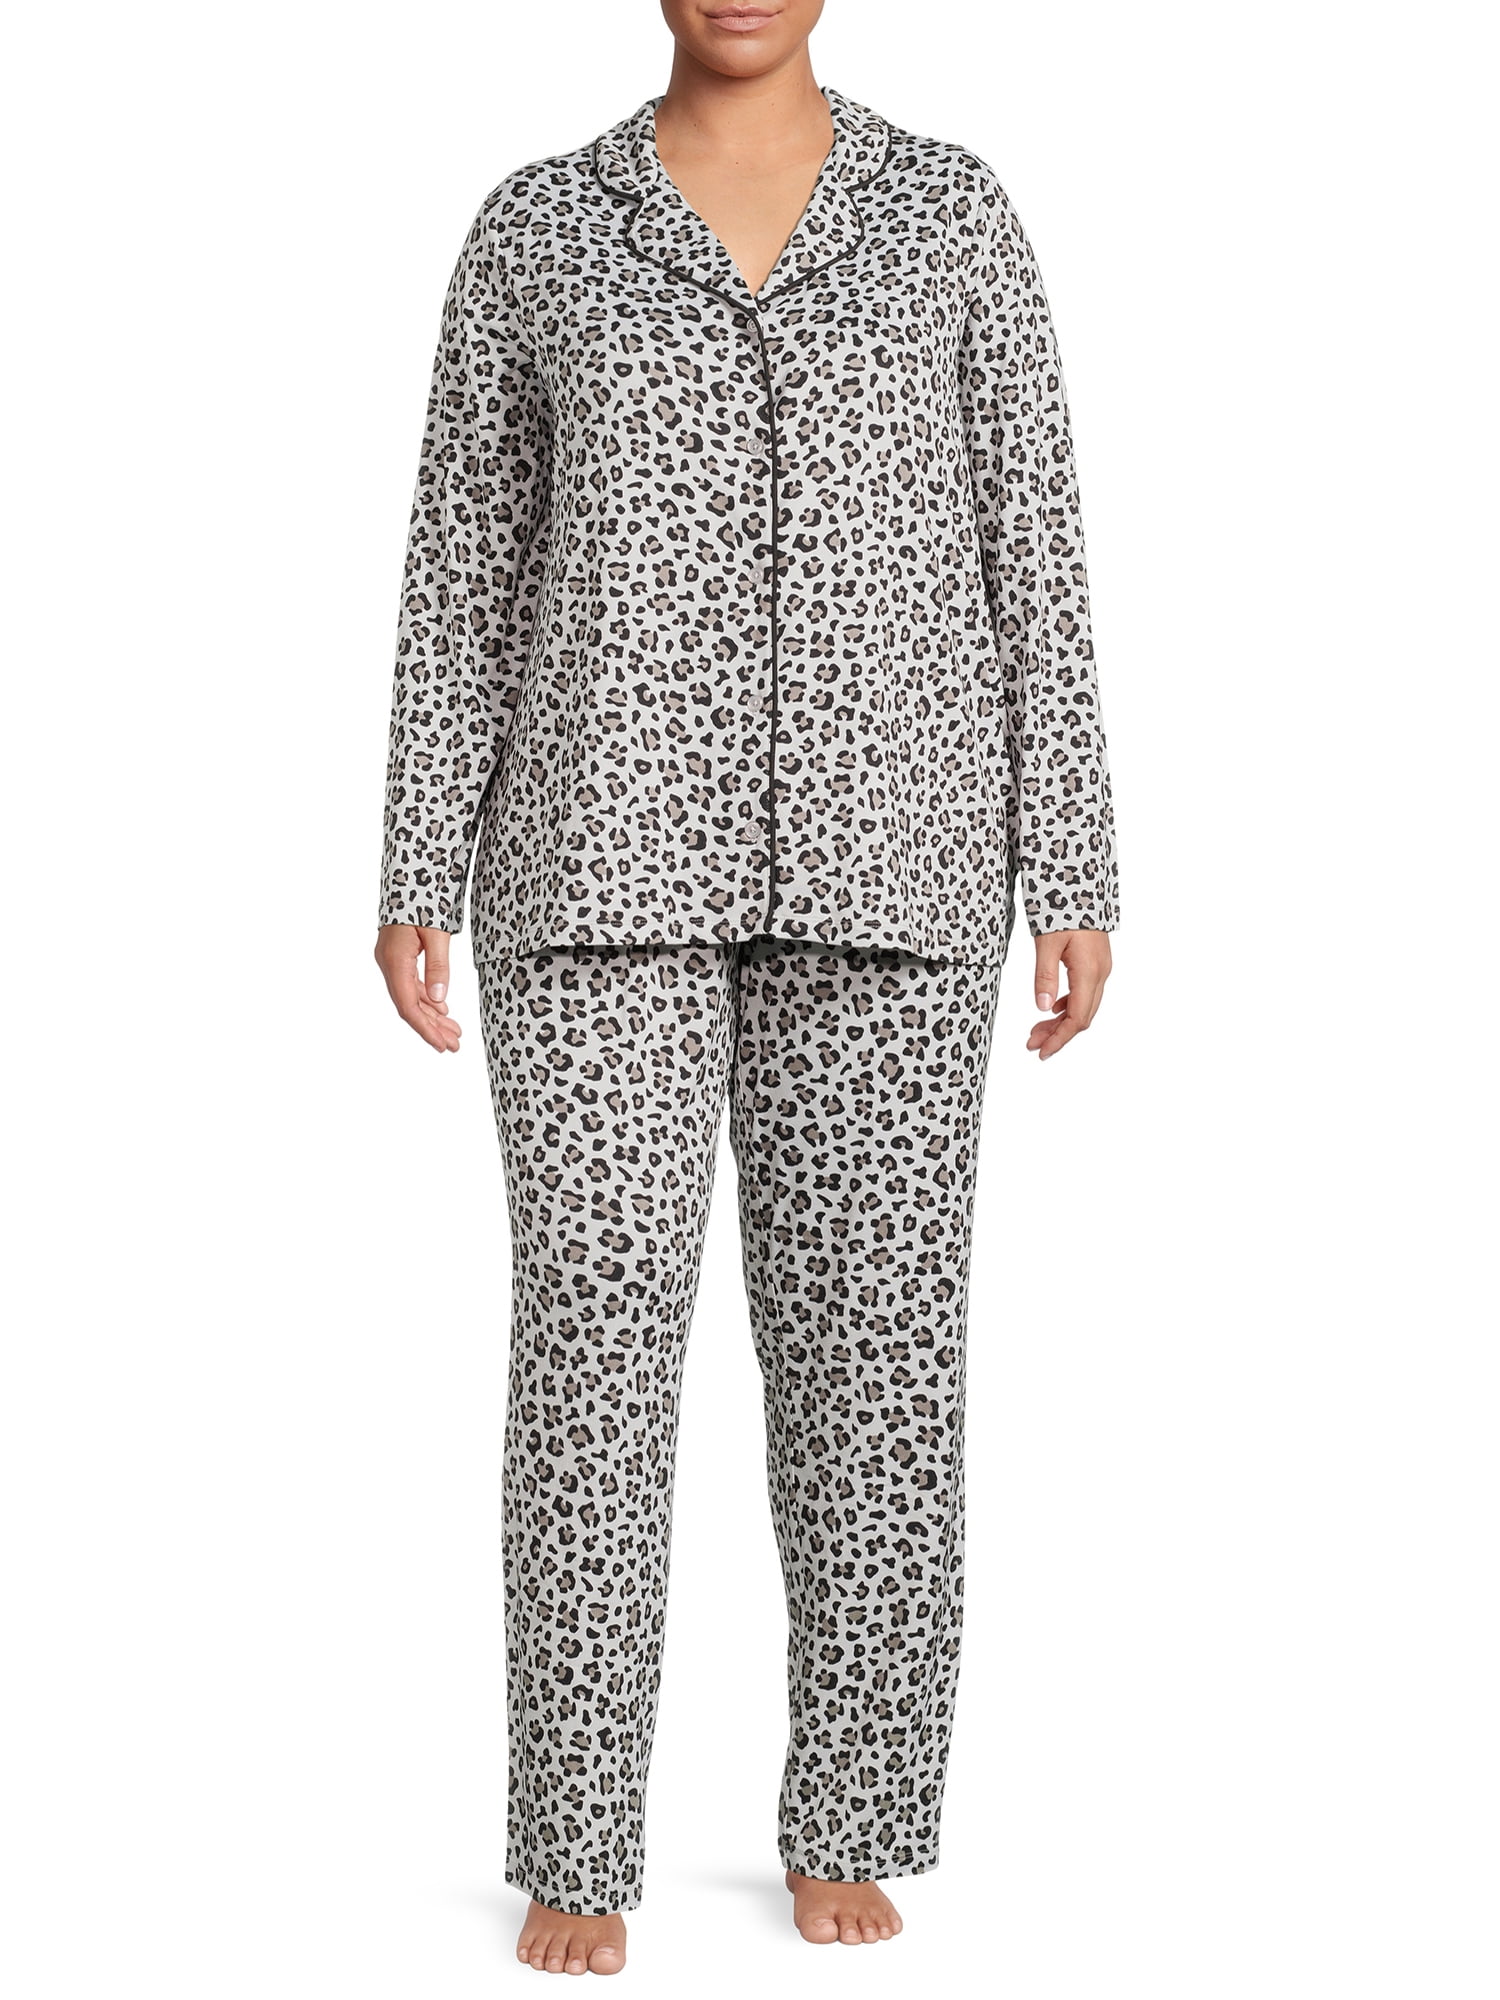 Hanes Mens 2 PC Cotton Poly Sleep Pajama Set S M L XL 2X varied color stripe